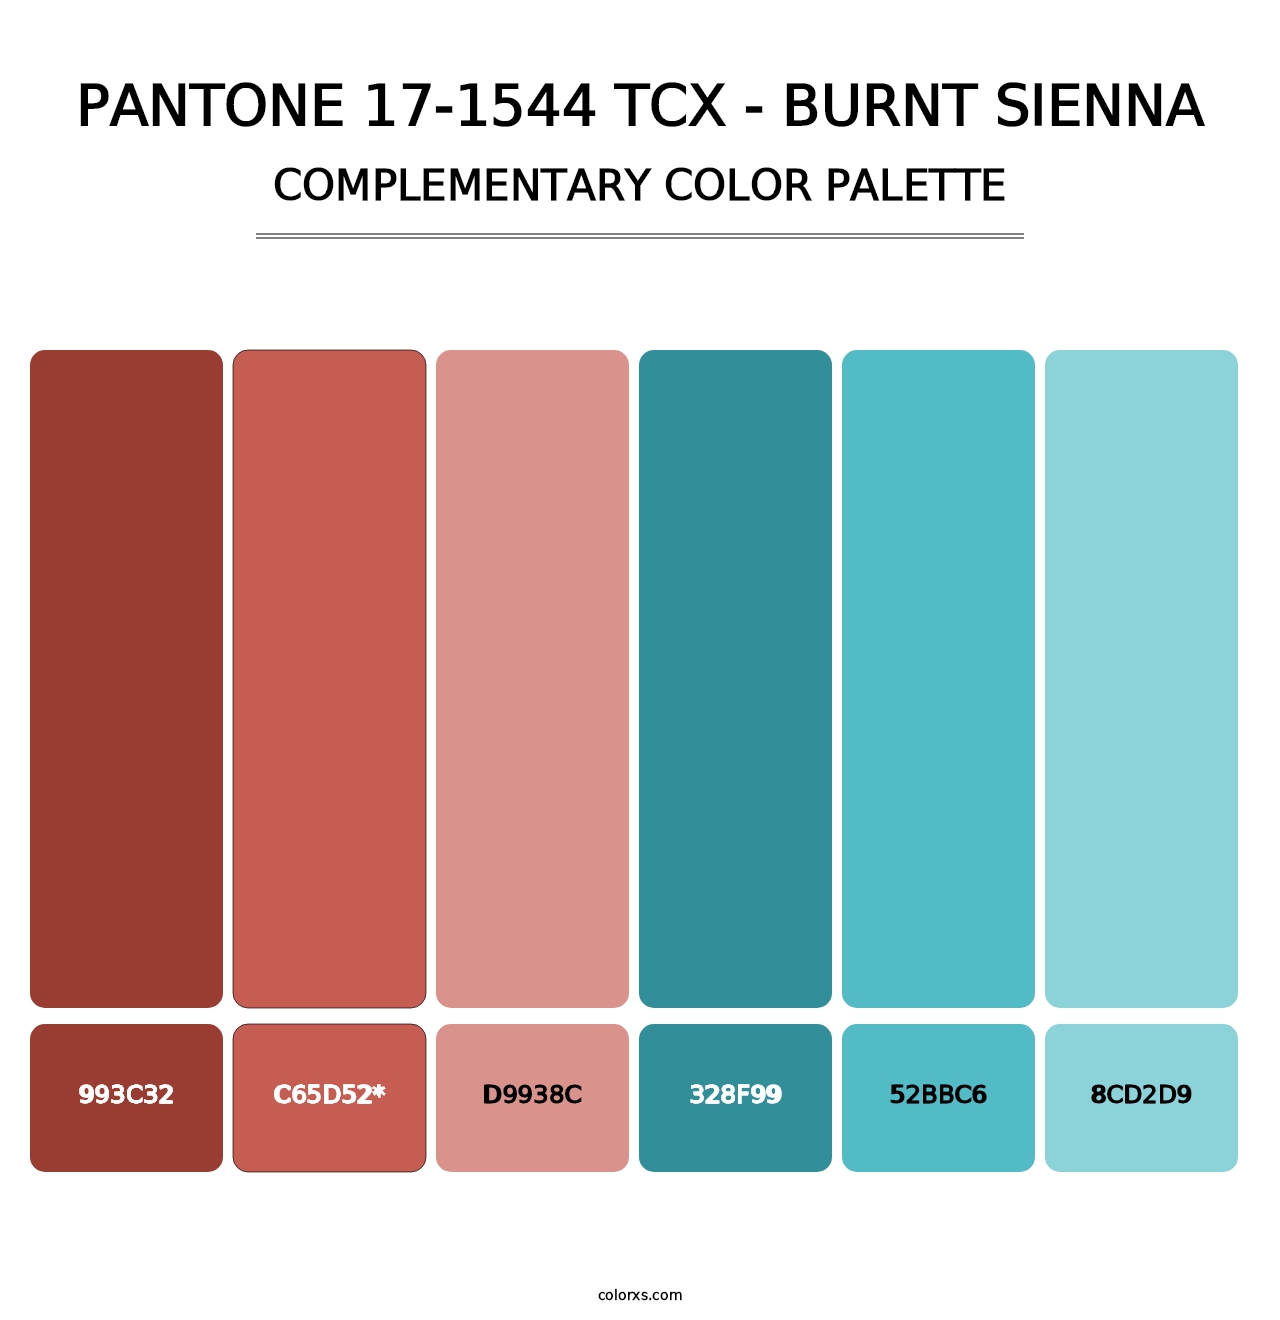 PANTONE 17-1544 TCX - Burnt Sienna - Complementary Color Palette